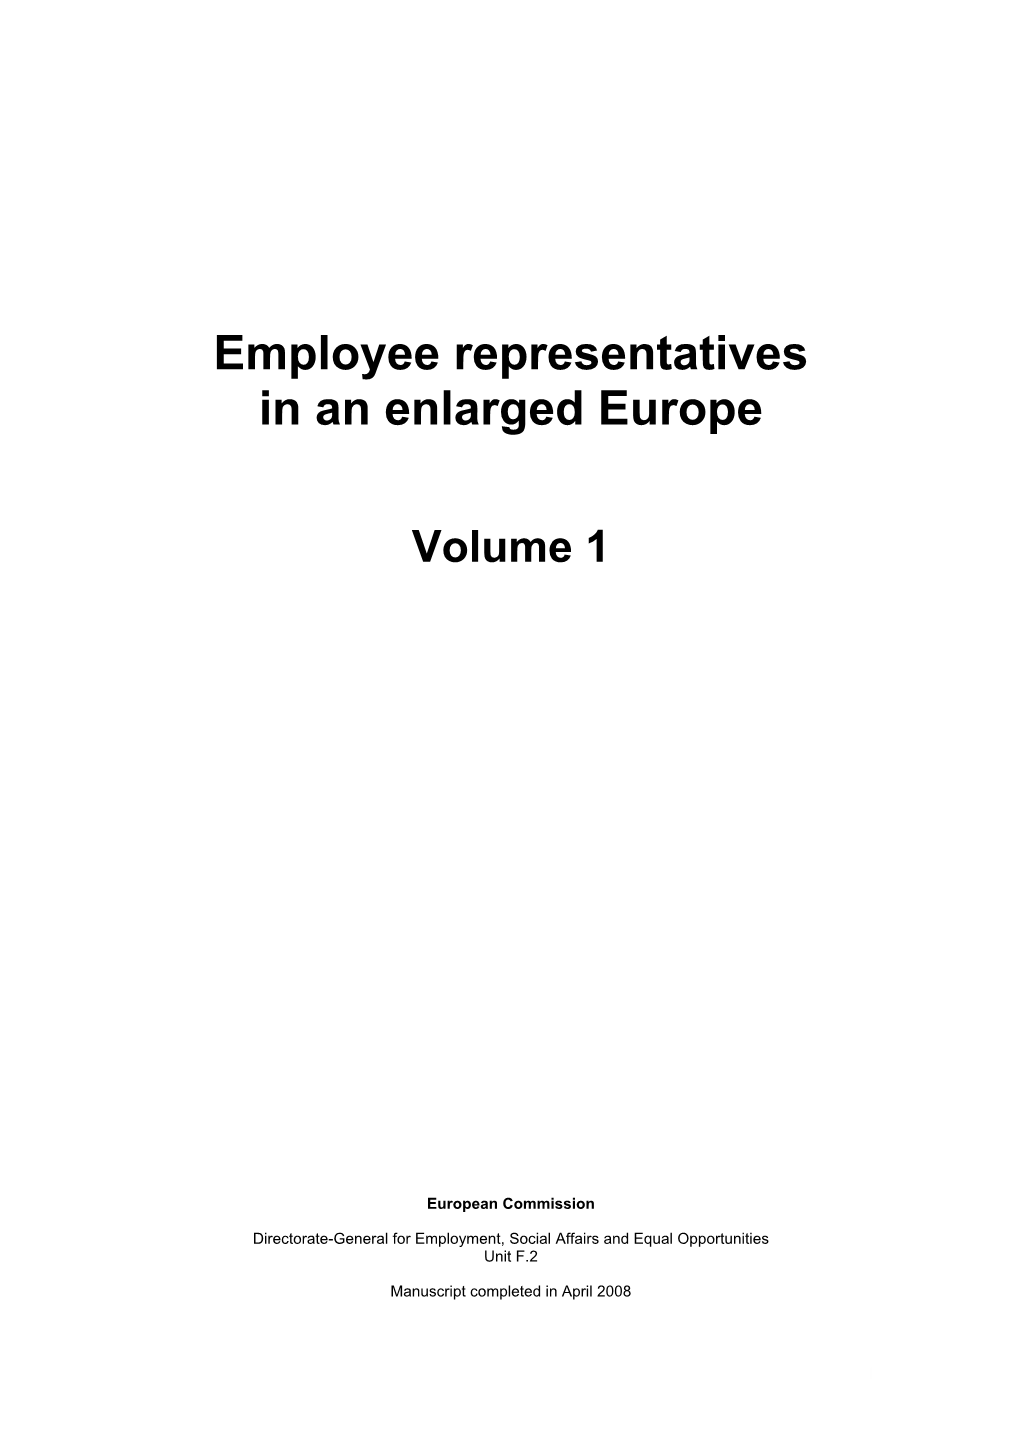 Employee Representatives in an Enlarged Europe